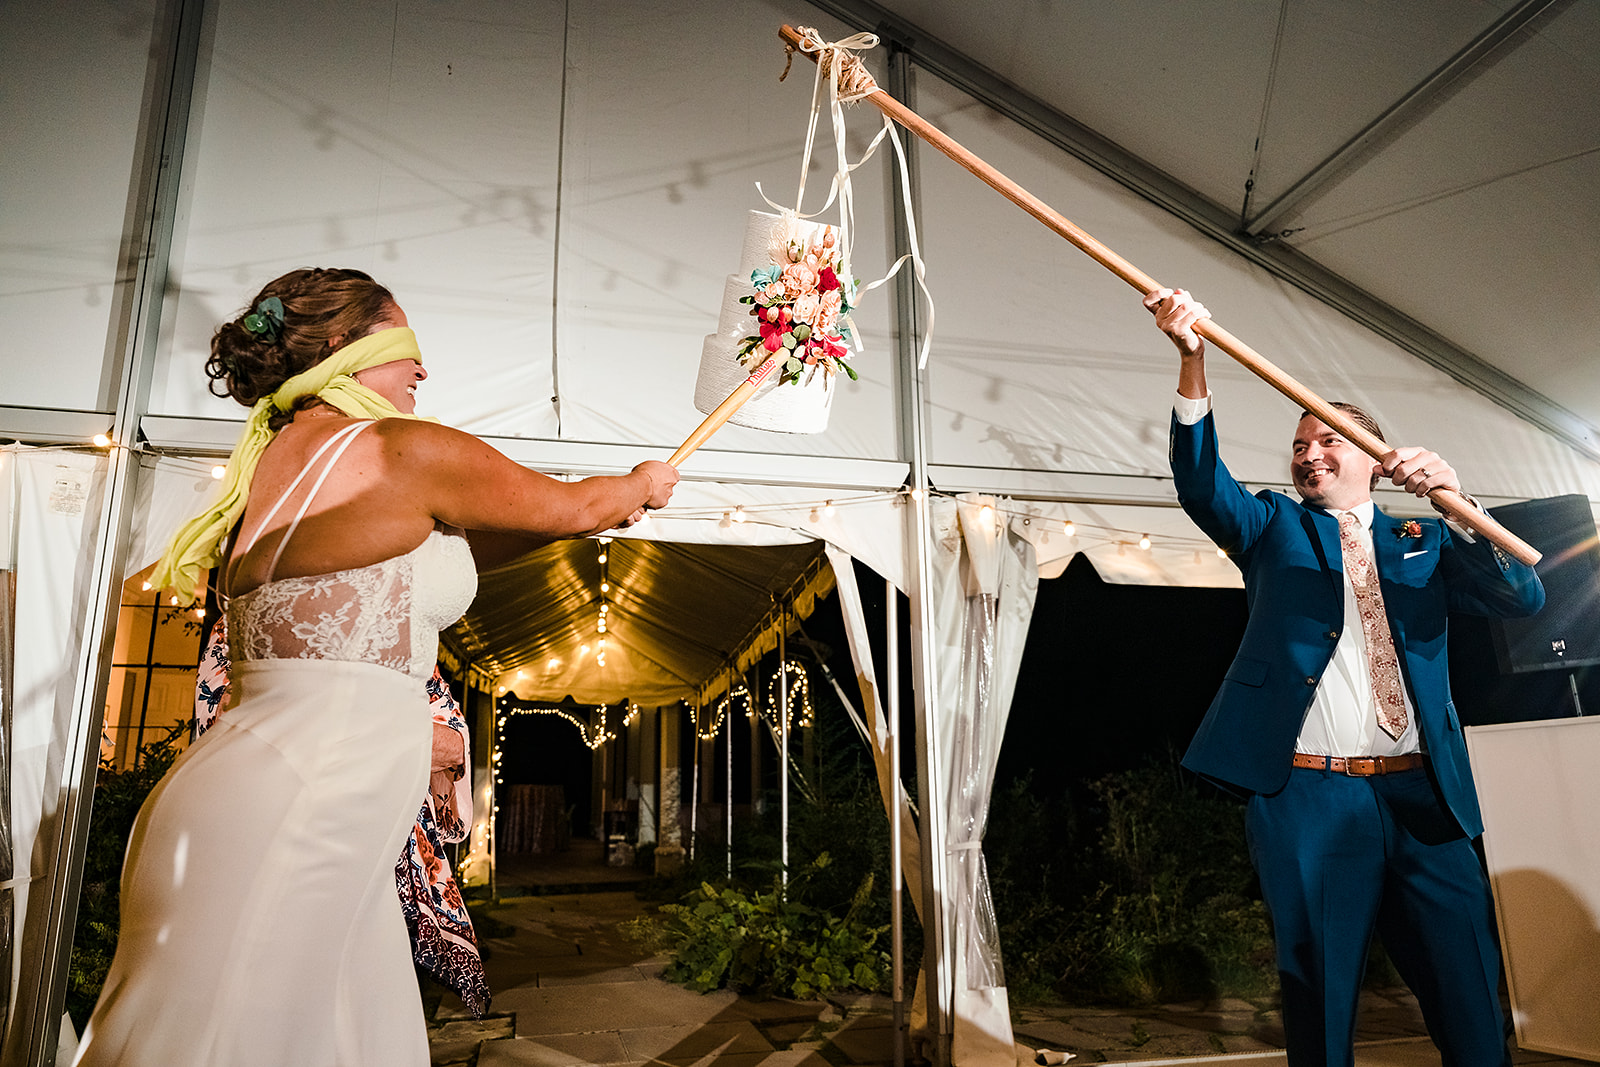 Bride swings at cake shaped piñata during wedding reception